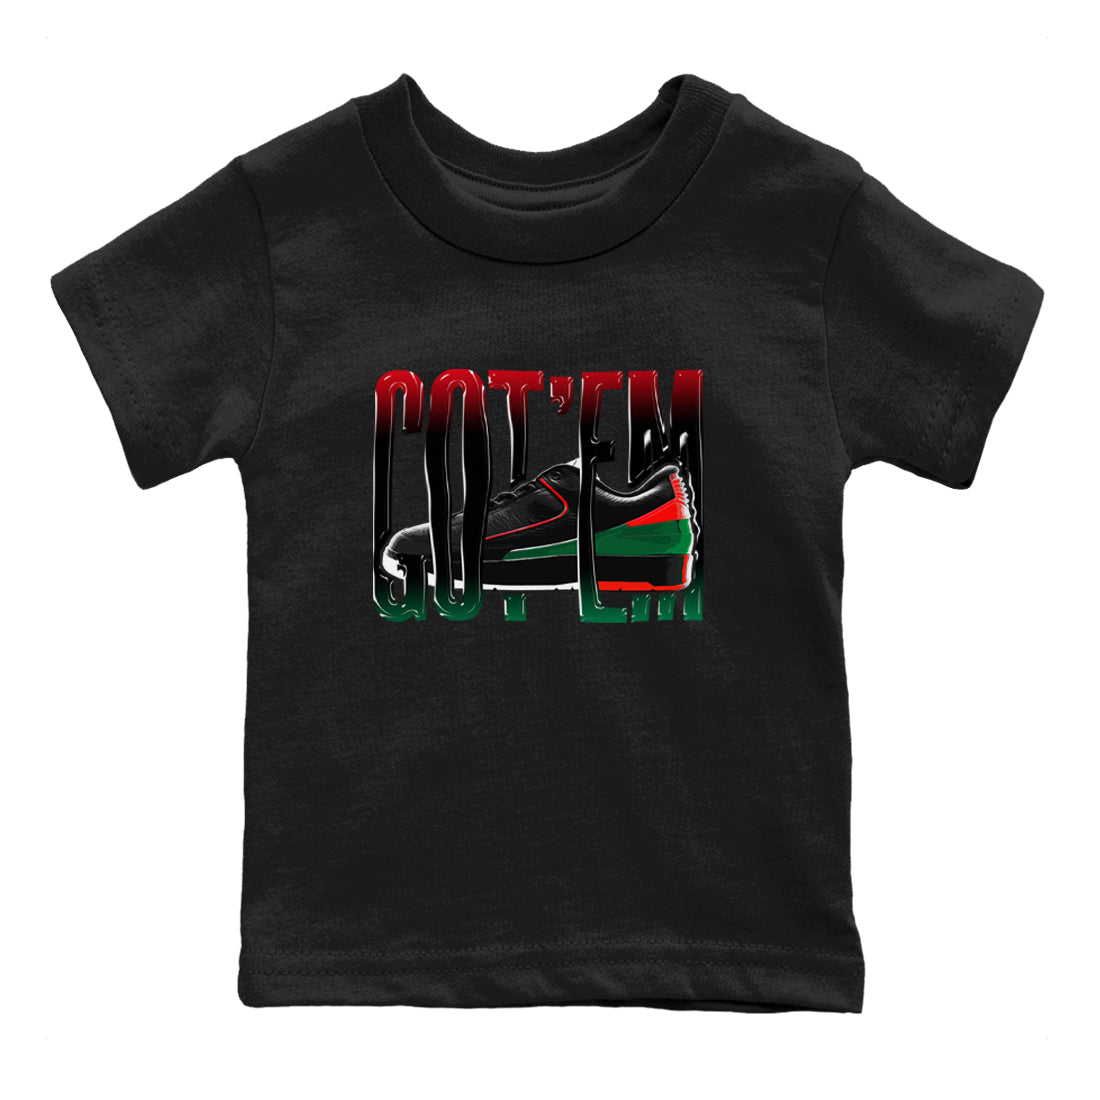 2s Christmas X-mas gift shirt to match jordans Wiggling Gotem sneaker tees Air Jordan 2 Christmas SNRT Sneaker Release Tees Baby Toddler Black 2 T-Shirt